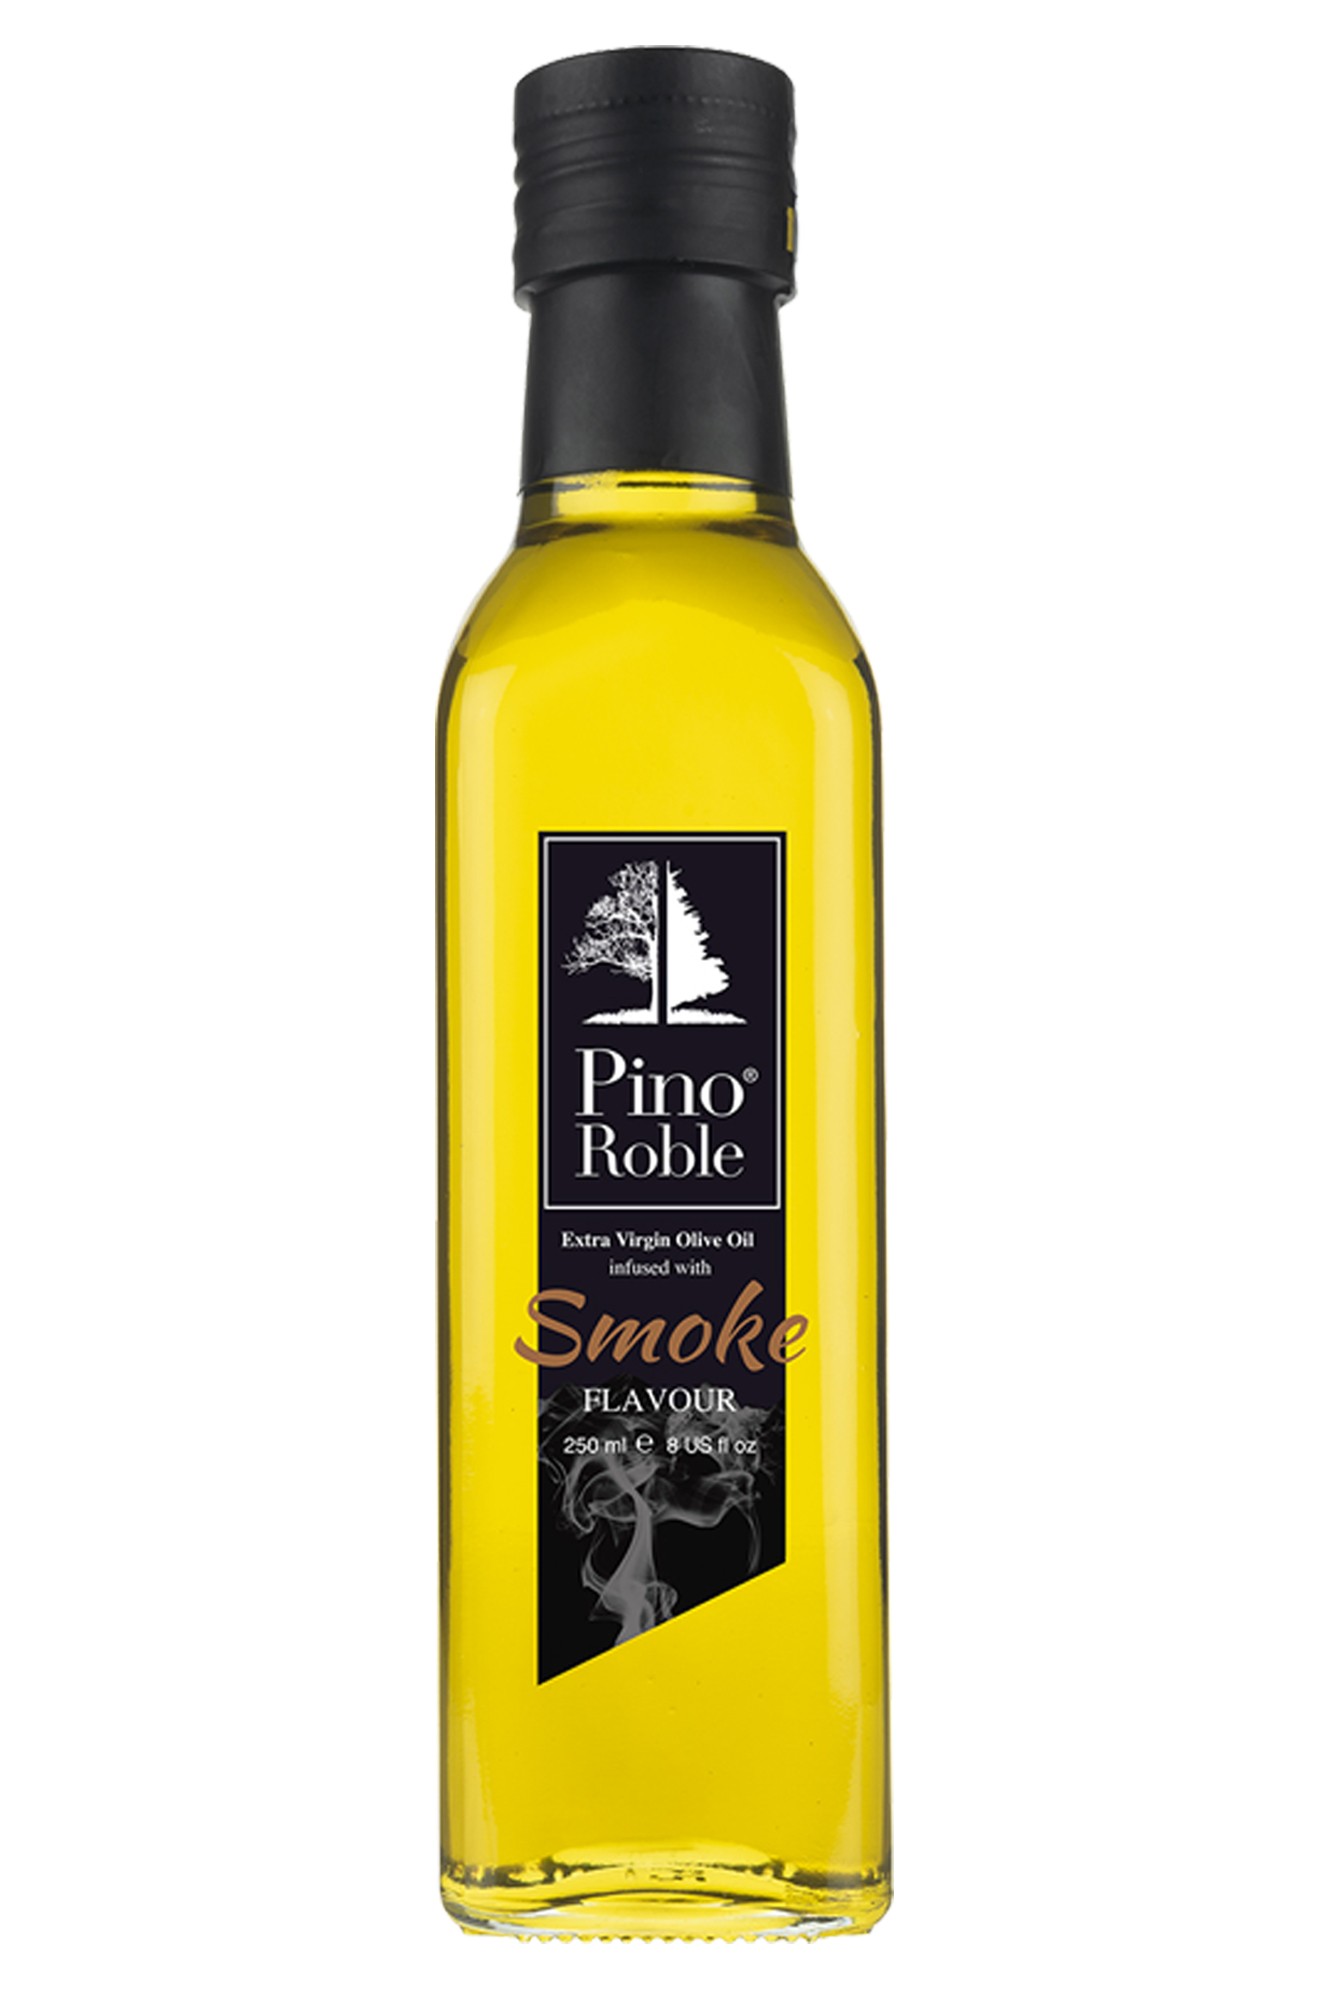 PinoRoble Tütsülenmiş Füme (Smoked Olive Oil) Barbekü Sos Aromalı Soğuk Sıkım Zeytinyağı 250ml